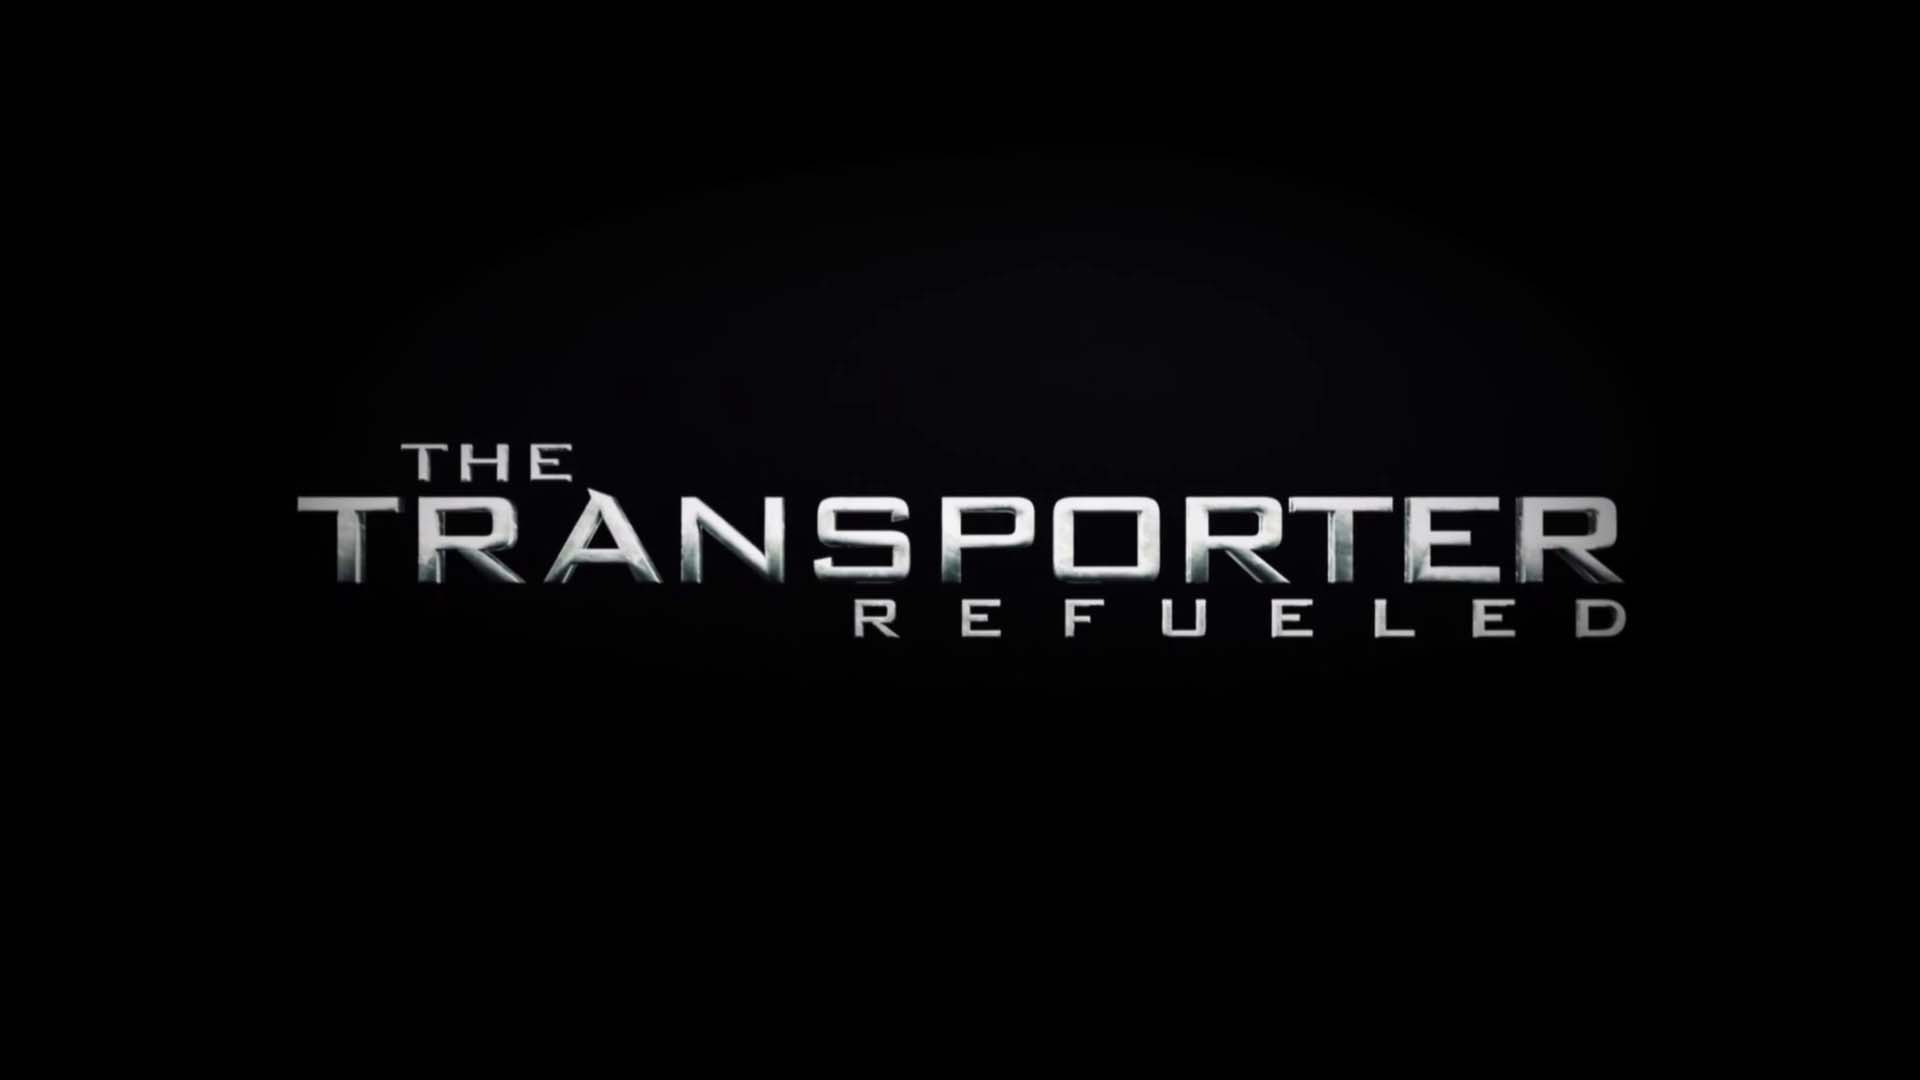 Transporter Refueled